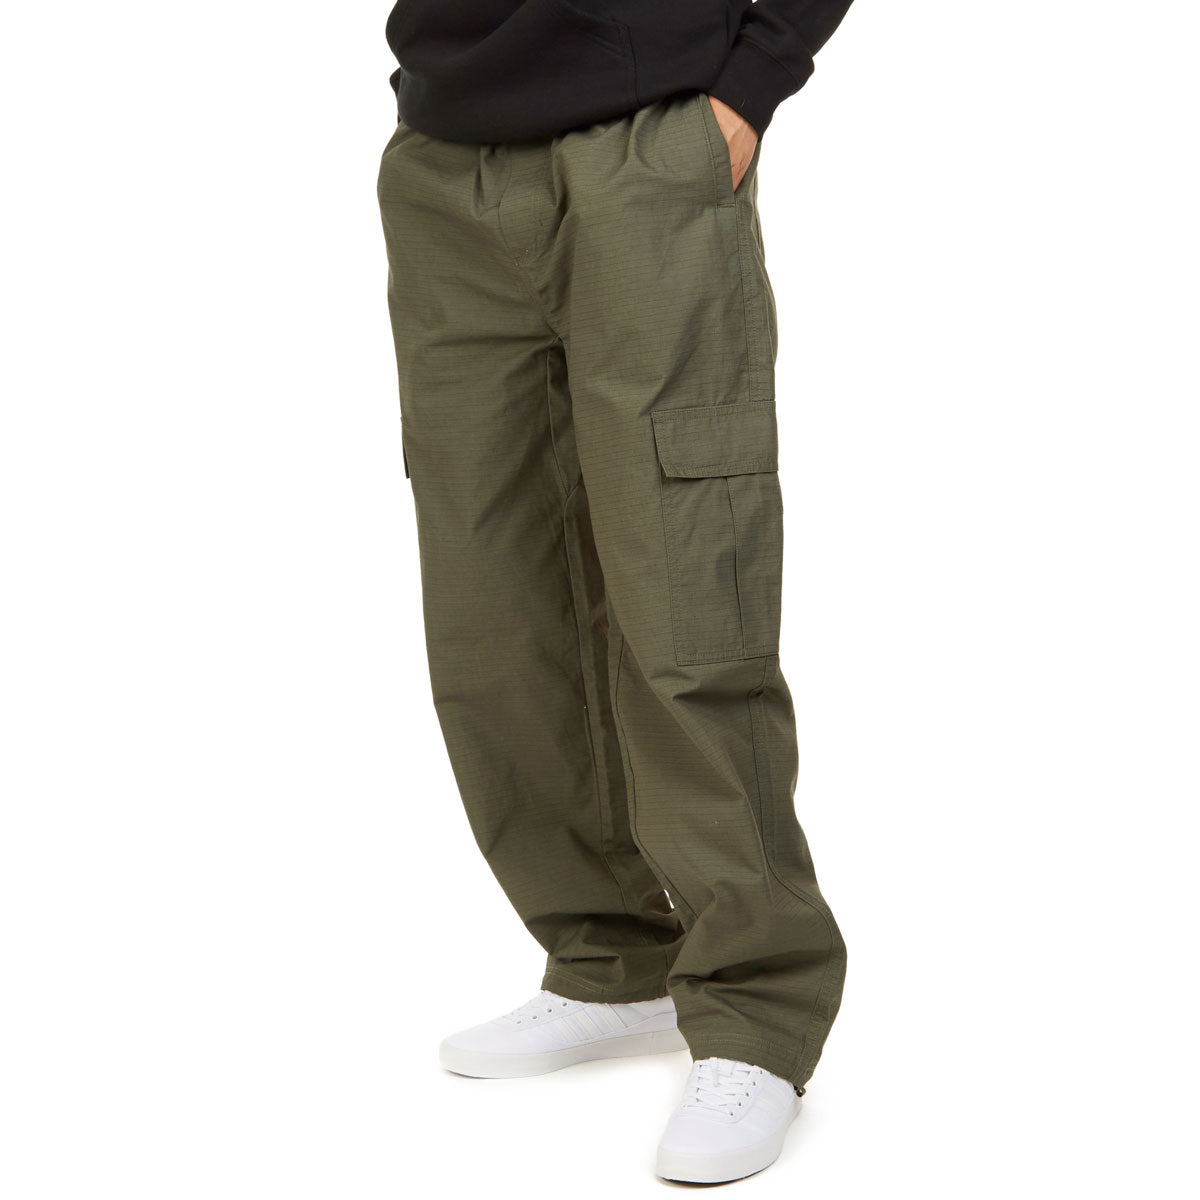 CCS Chandler Ripstop Cargo Pants - Black/Green